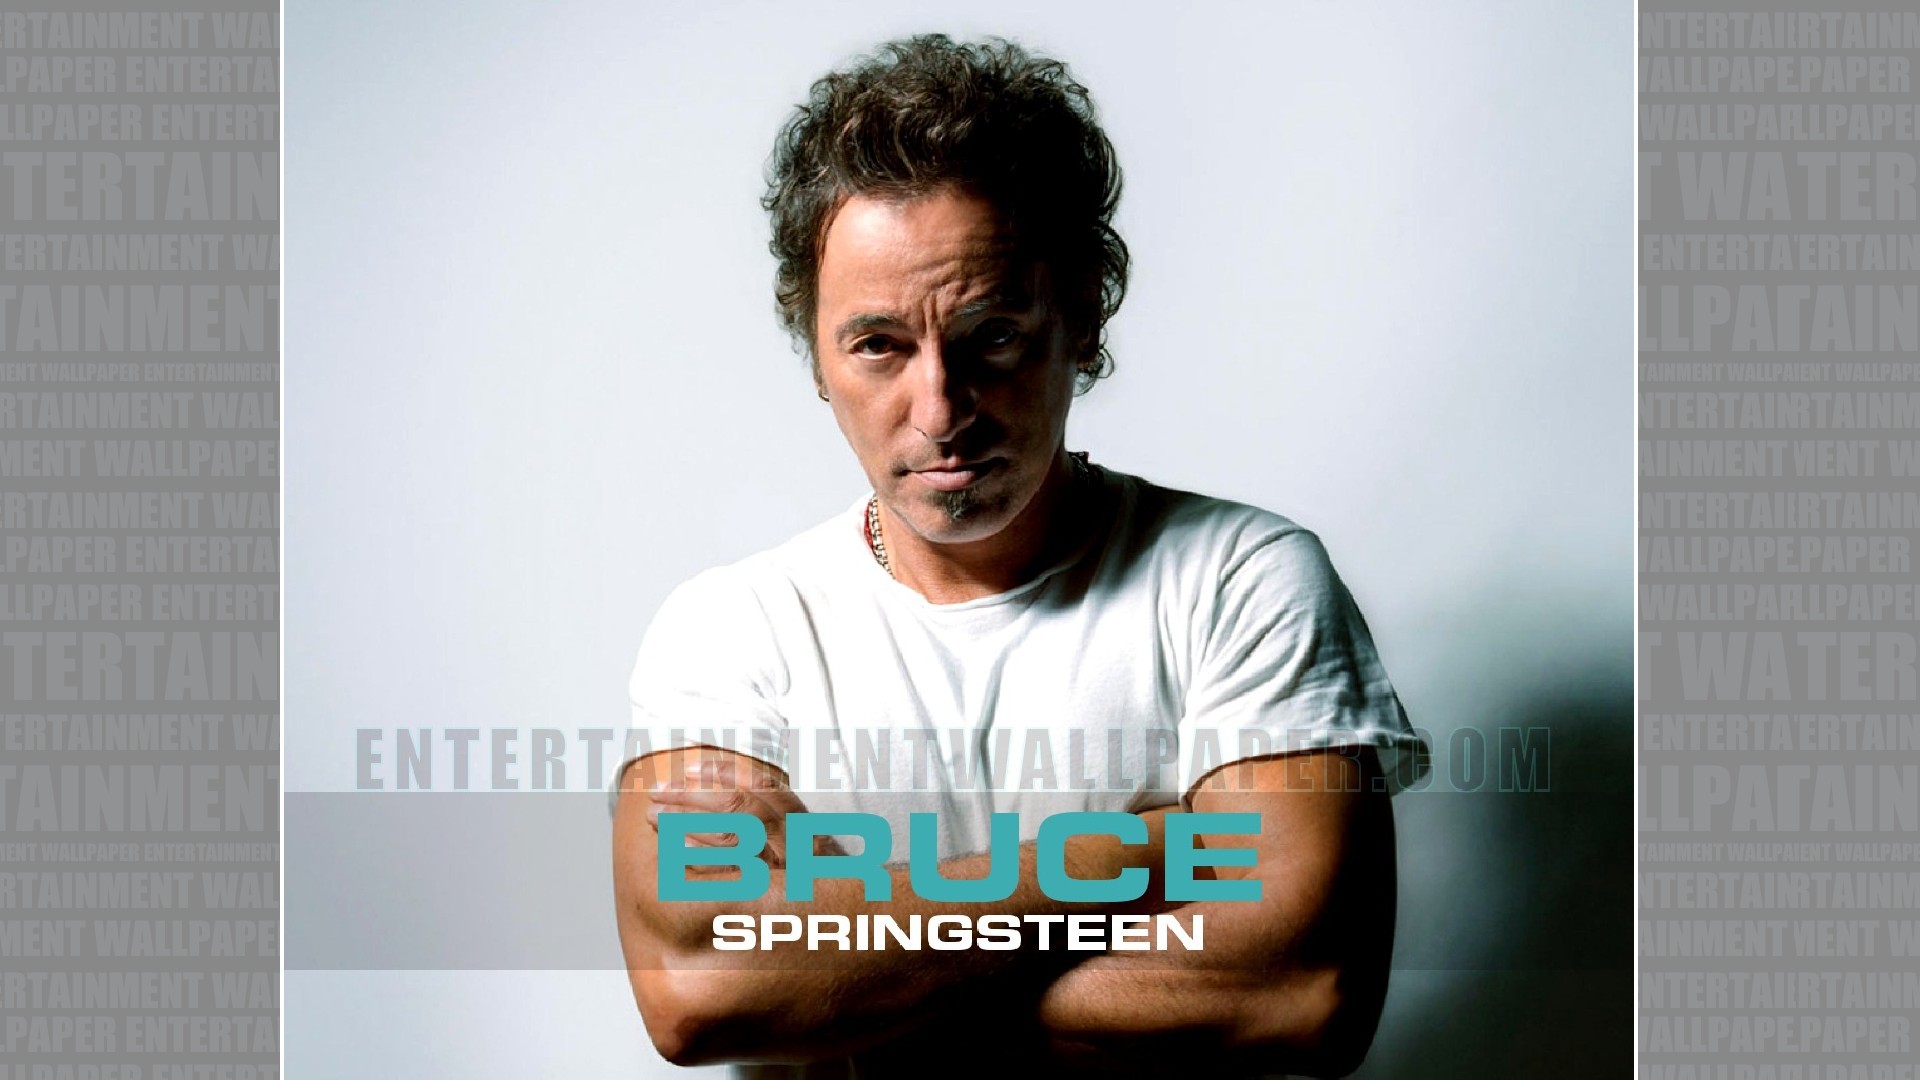 1920x1080 Bruce Springsteen Wallpaper - Original size, download now.